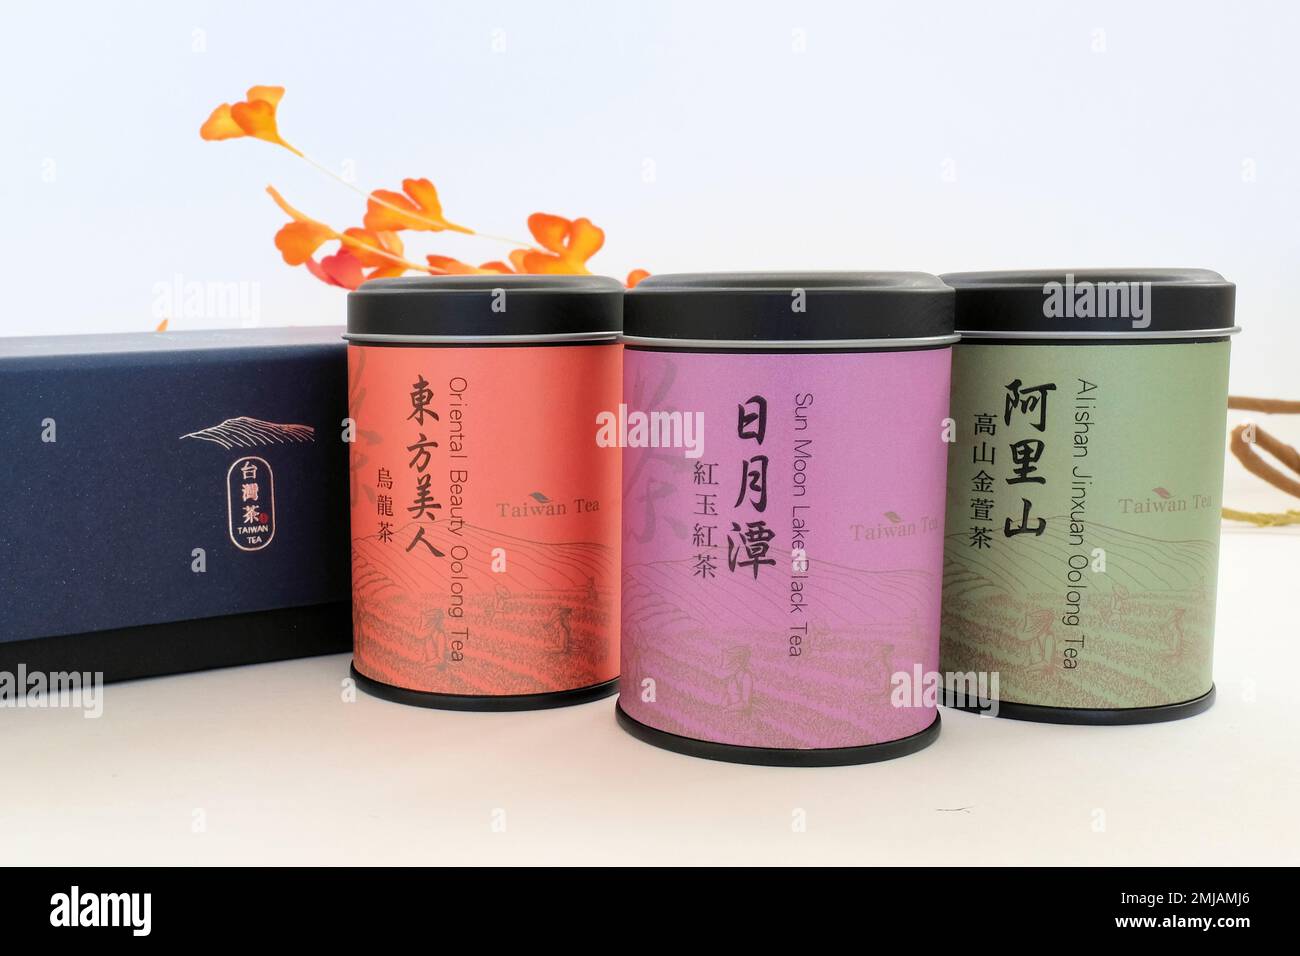 Hsin Tung Yang brand gift box set of Taiwanese teas: loose leaf Oolong and Sun Moon Lake Black Tea in tins; Taipei food service and retail company. Stock Photo